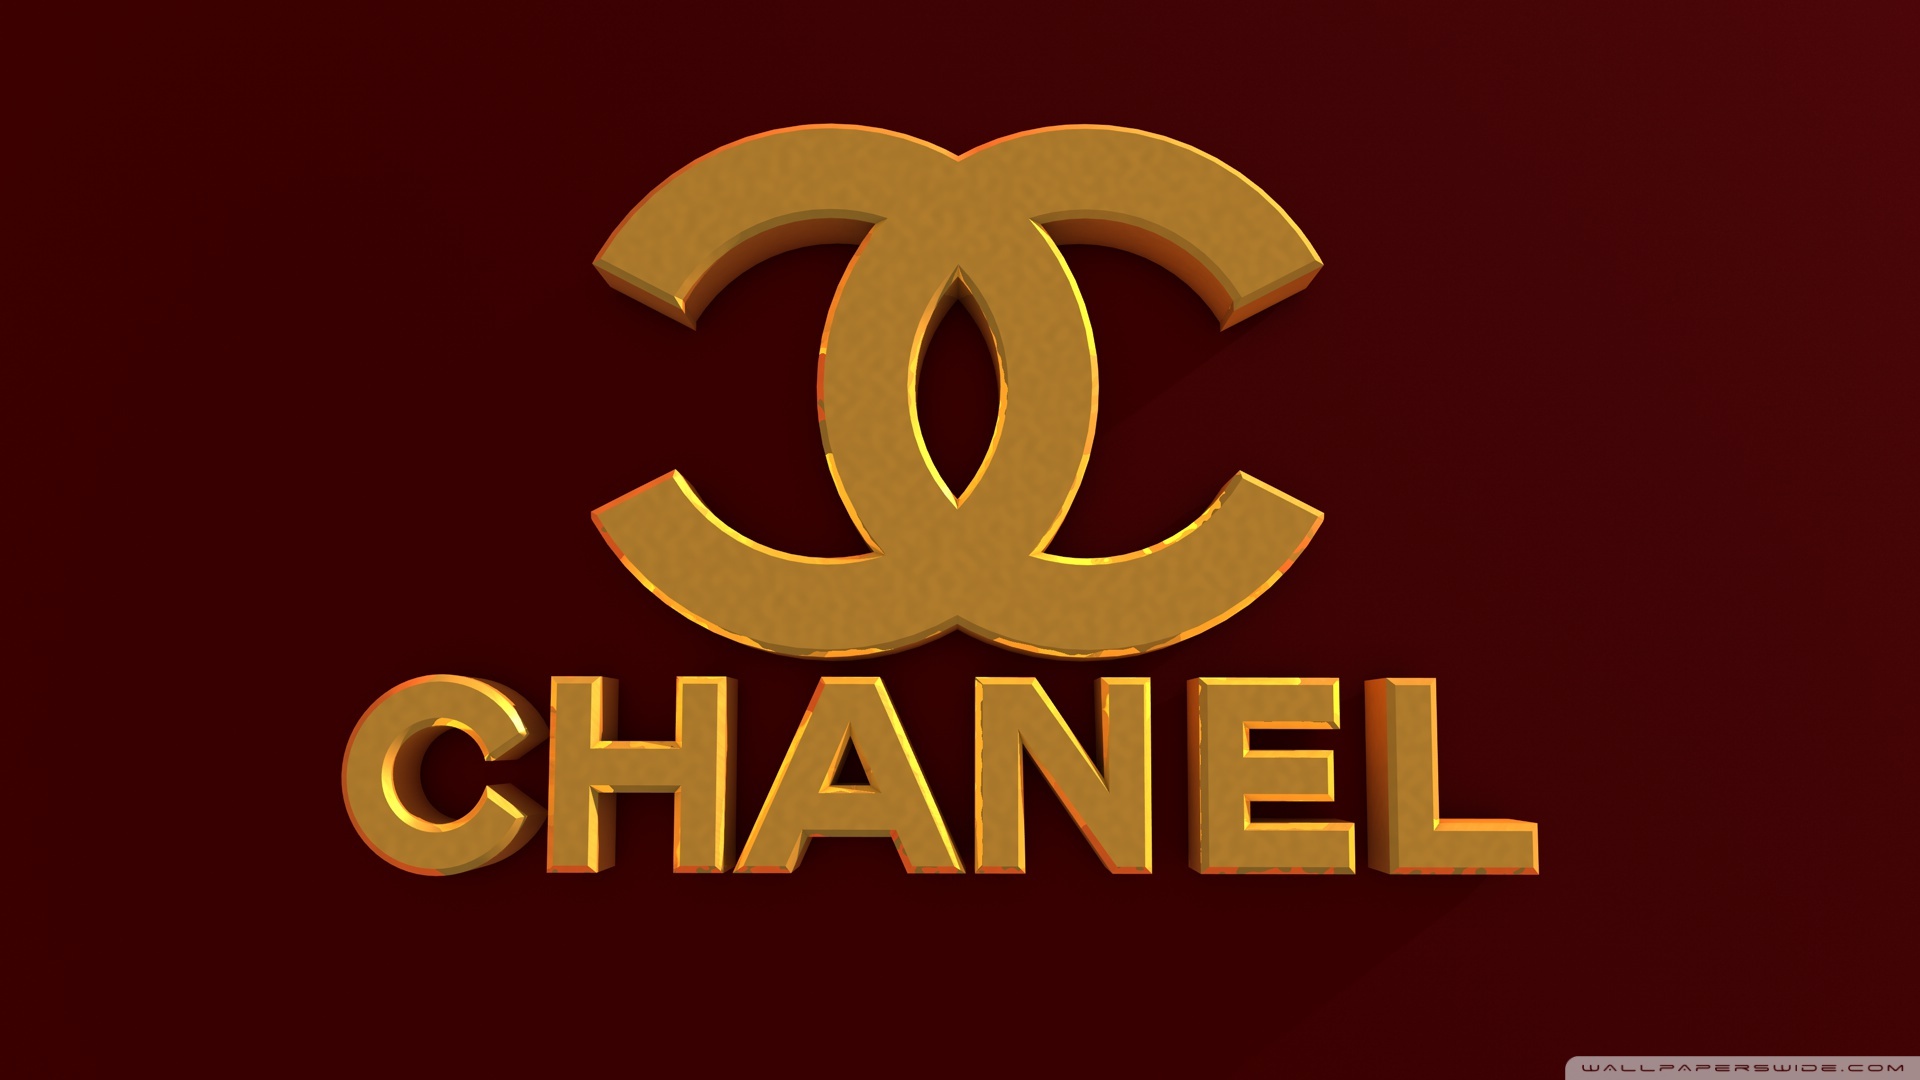 HD chanel logo wallpapers